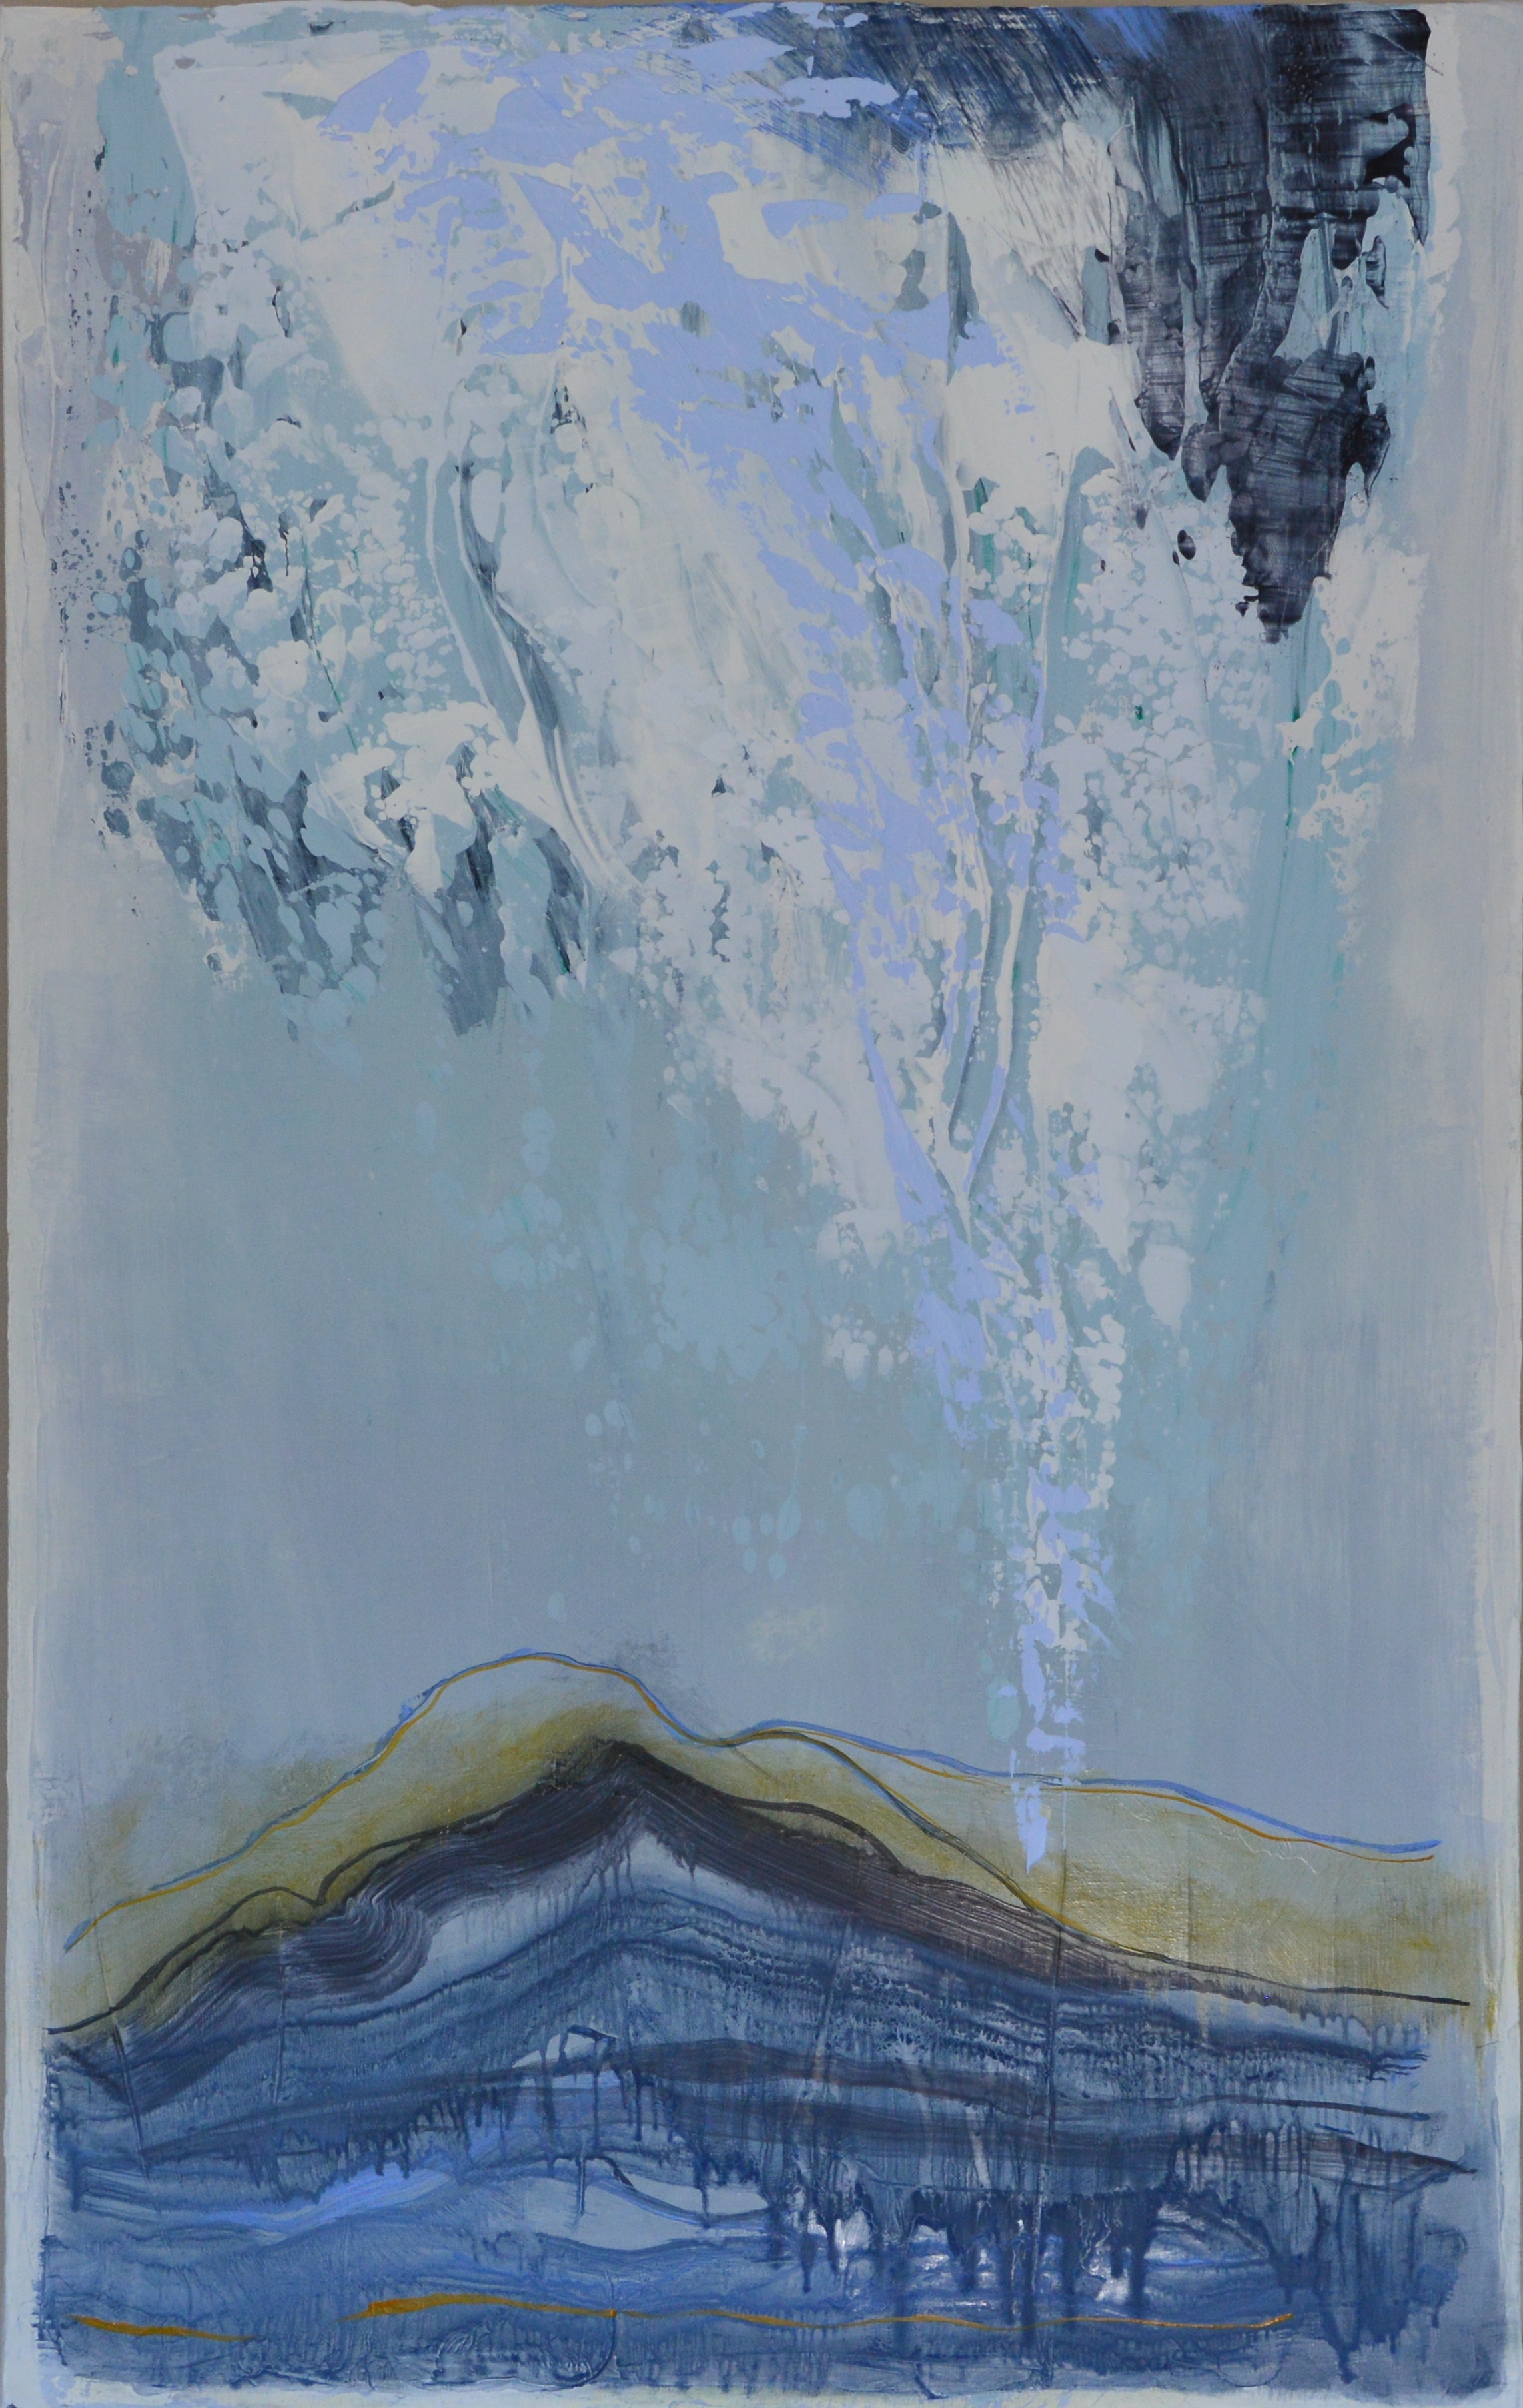   Ocean Cloud   (Sold)   24 x 32  Oil on Canvas 